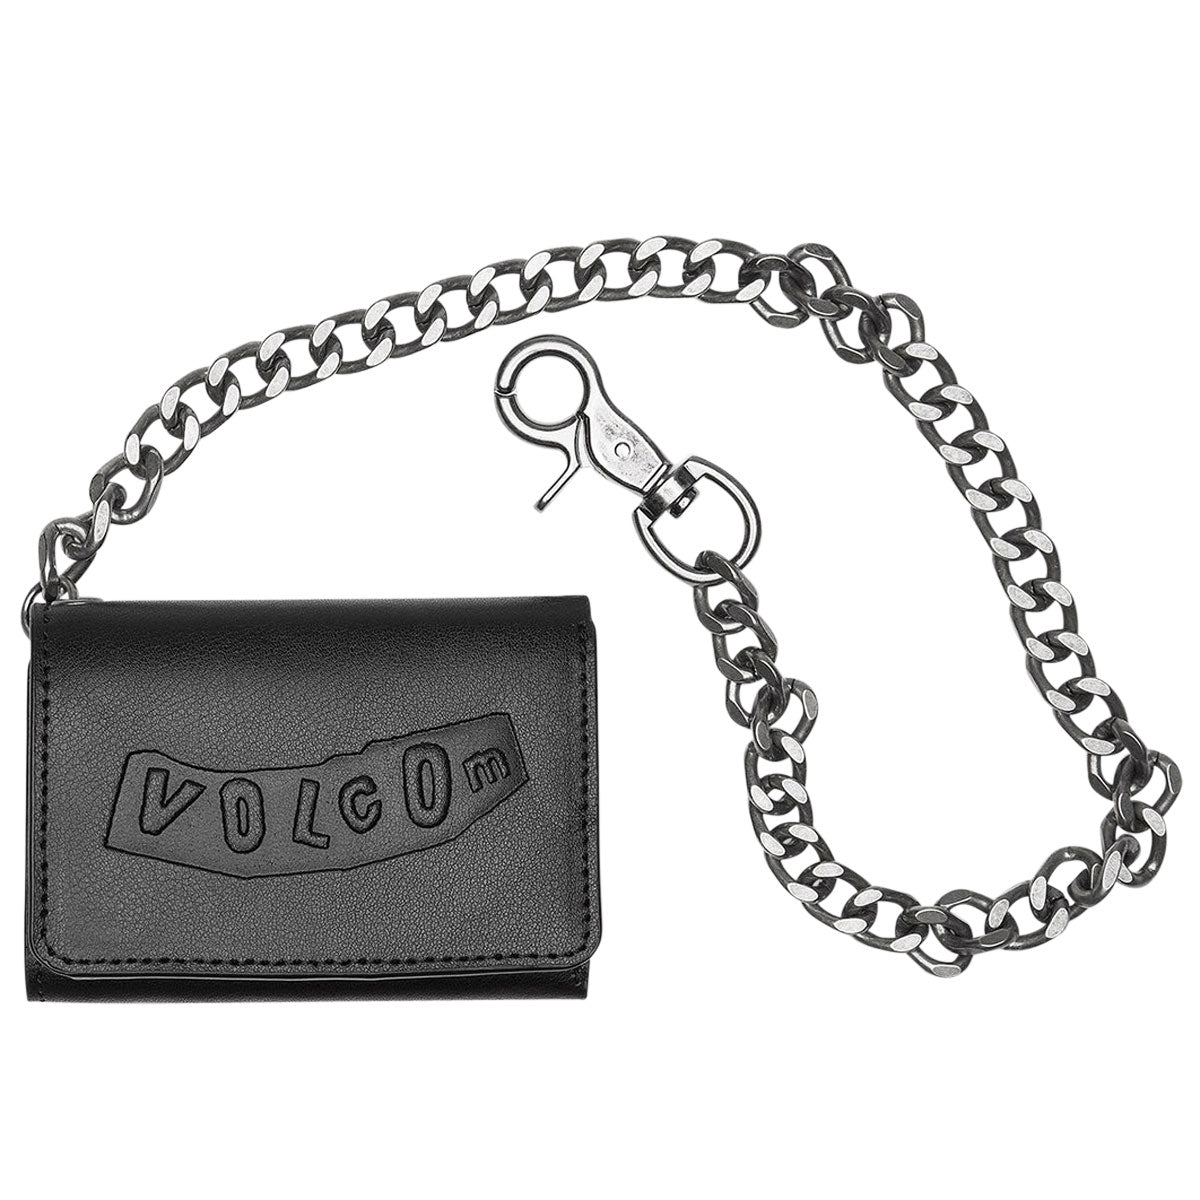 Volcom Pistol Leather Wallet - Black image 1